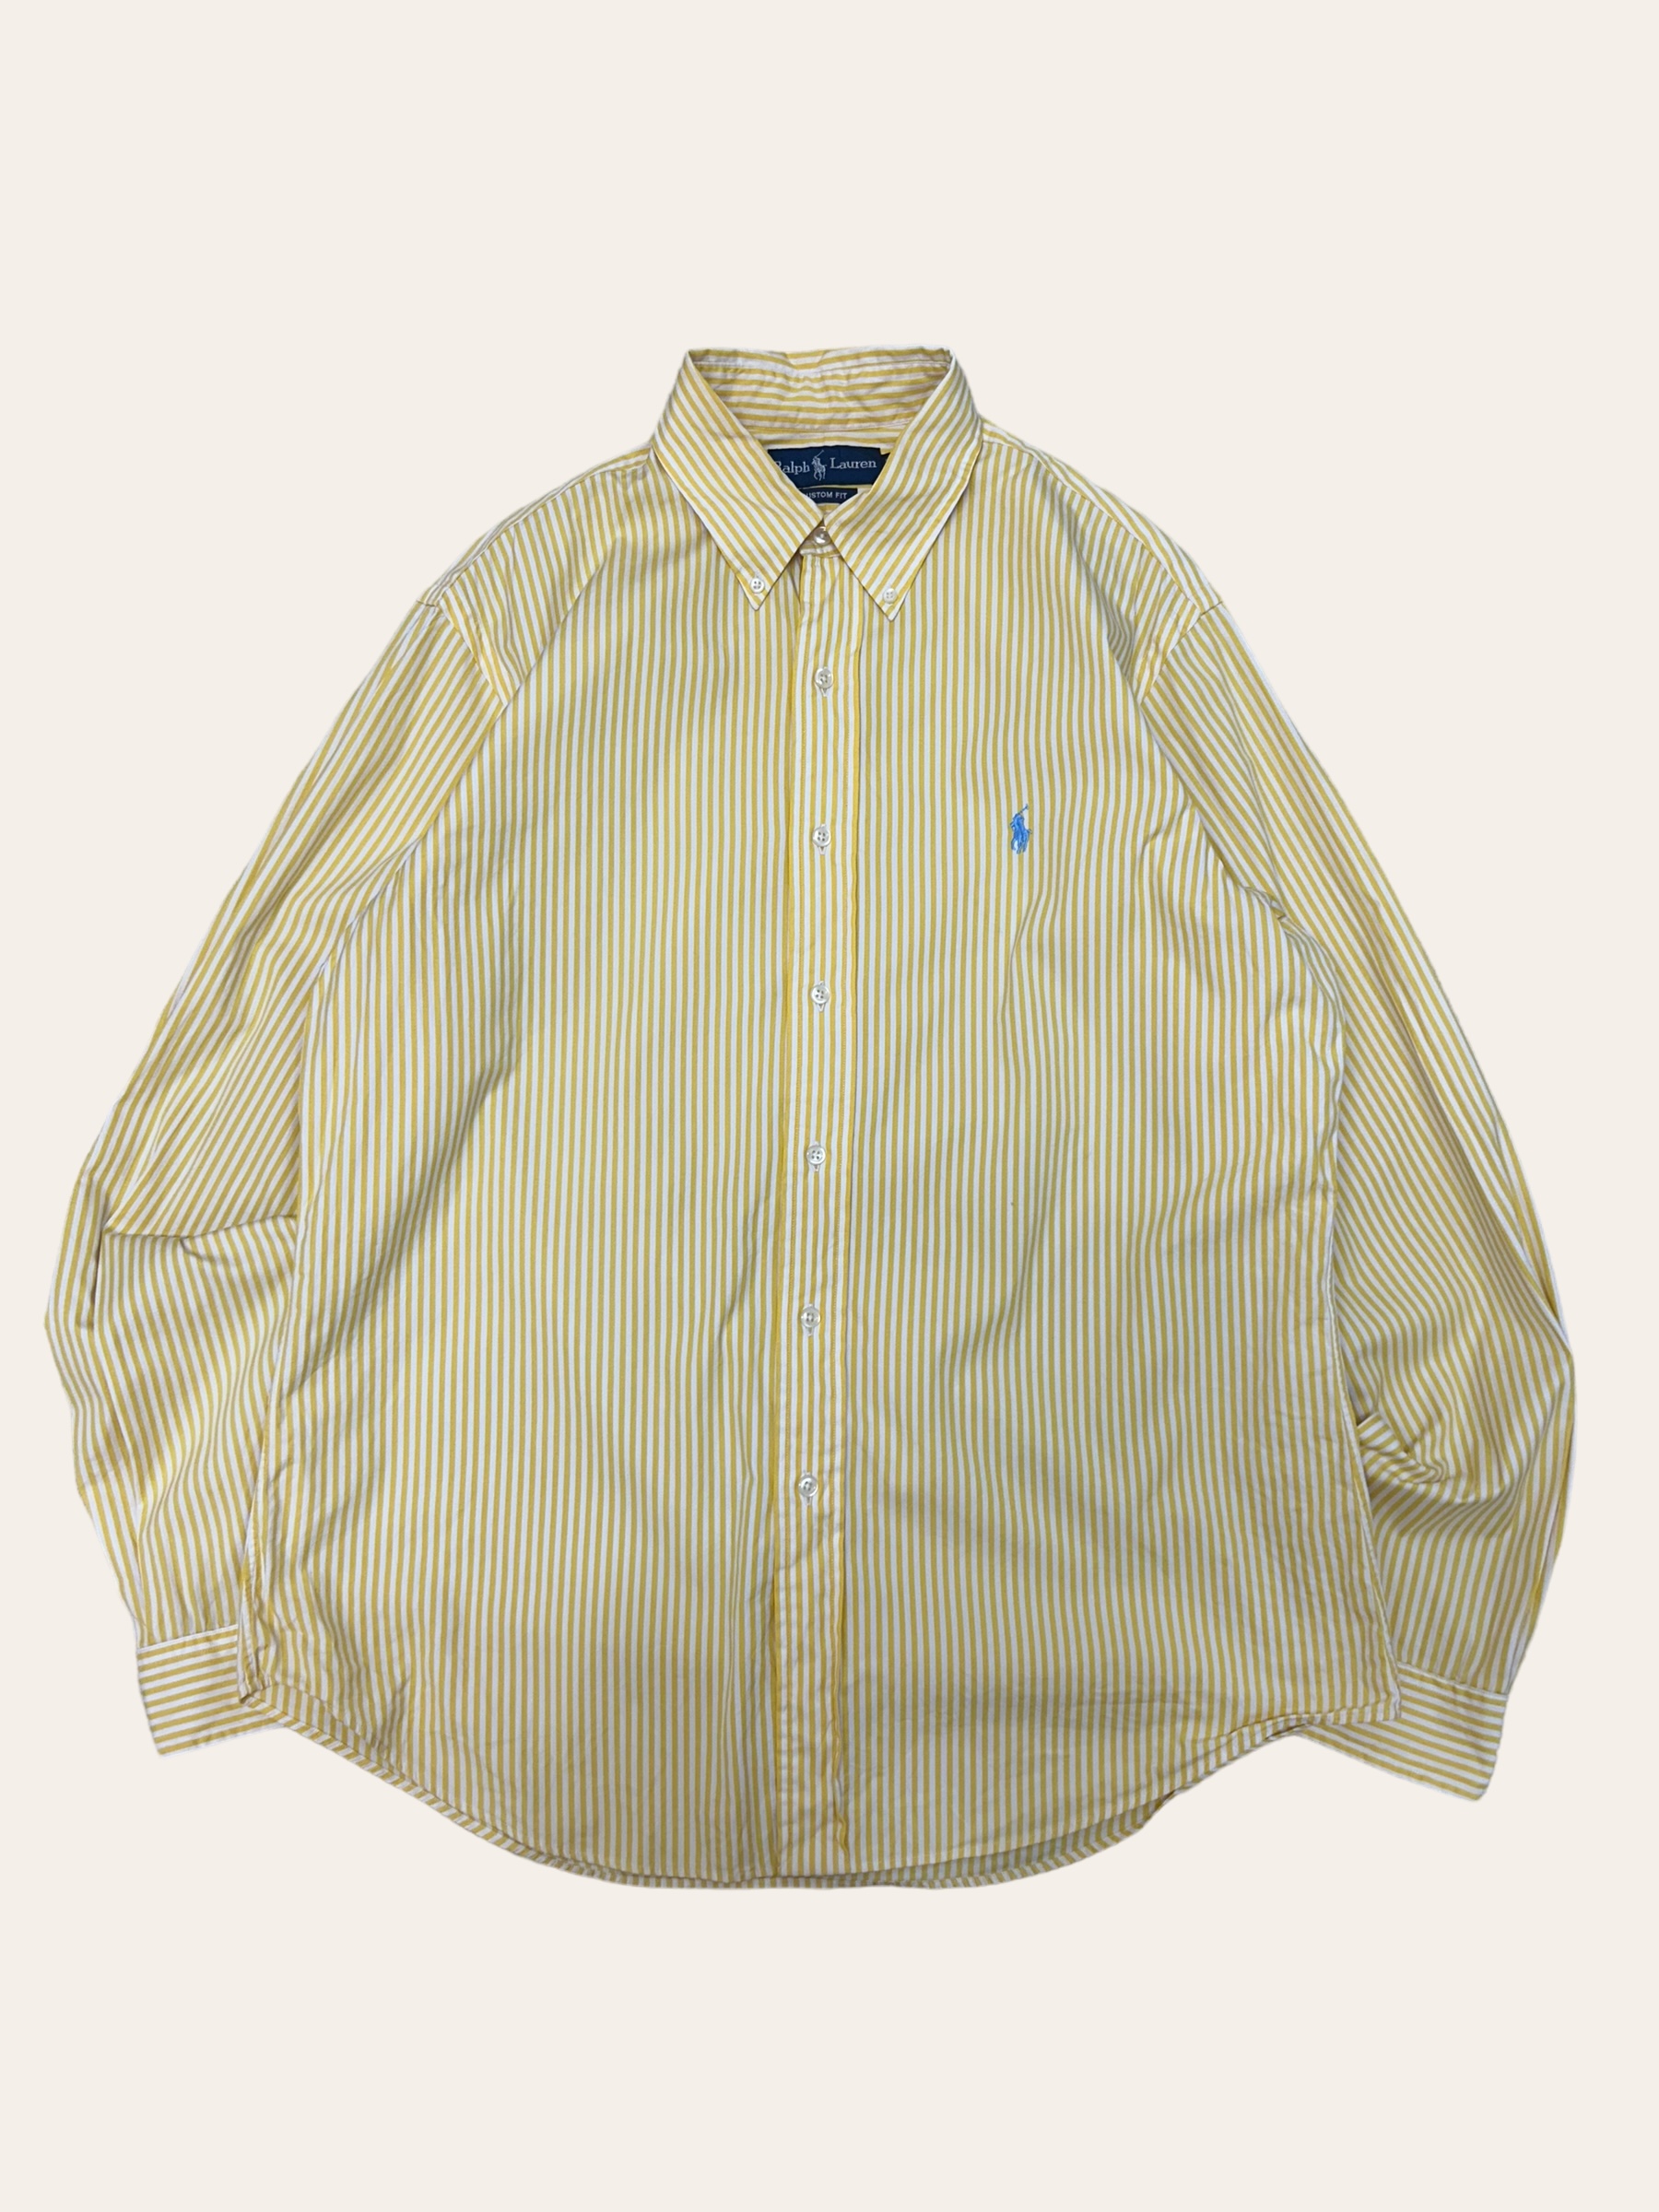 (From USA)Polo ralph lauren yellow stripe shirt L